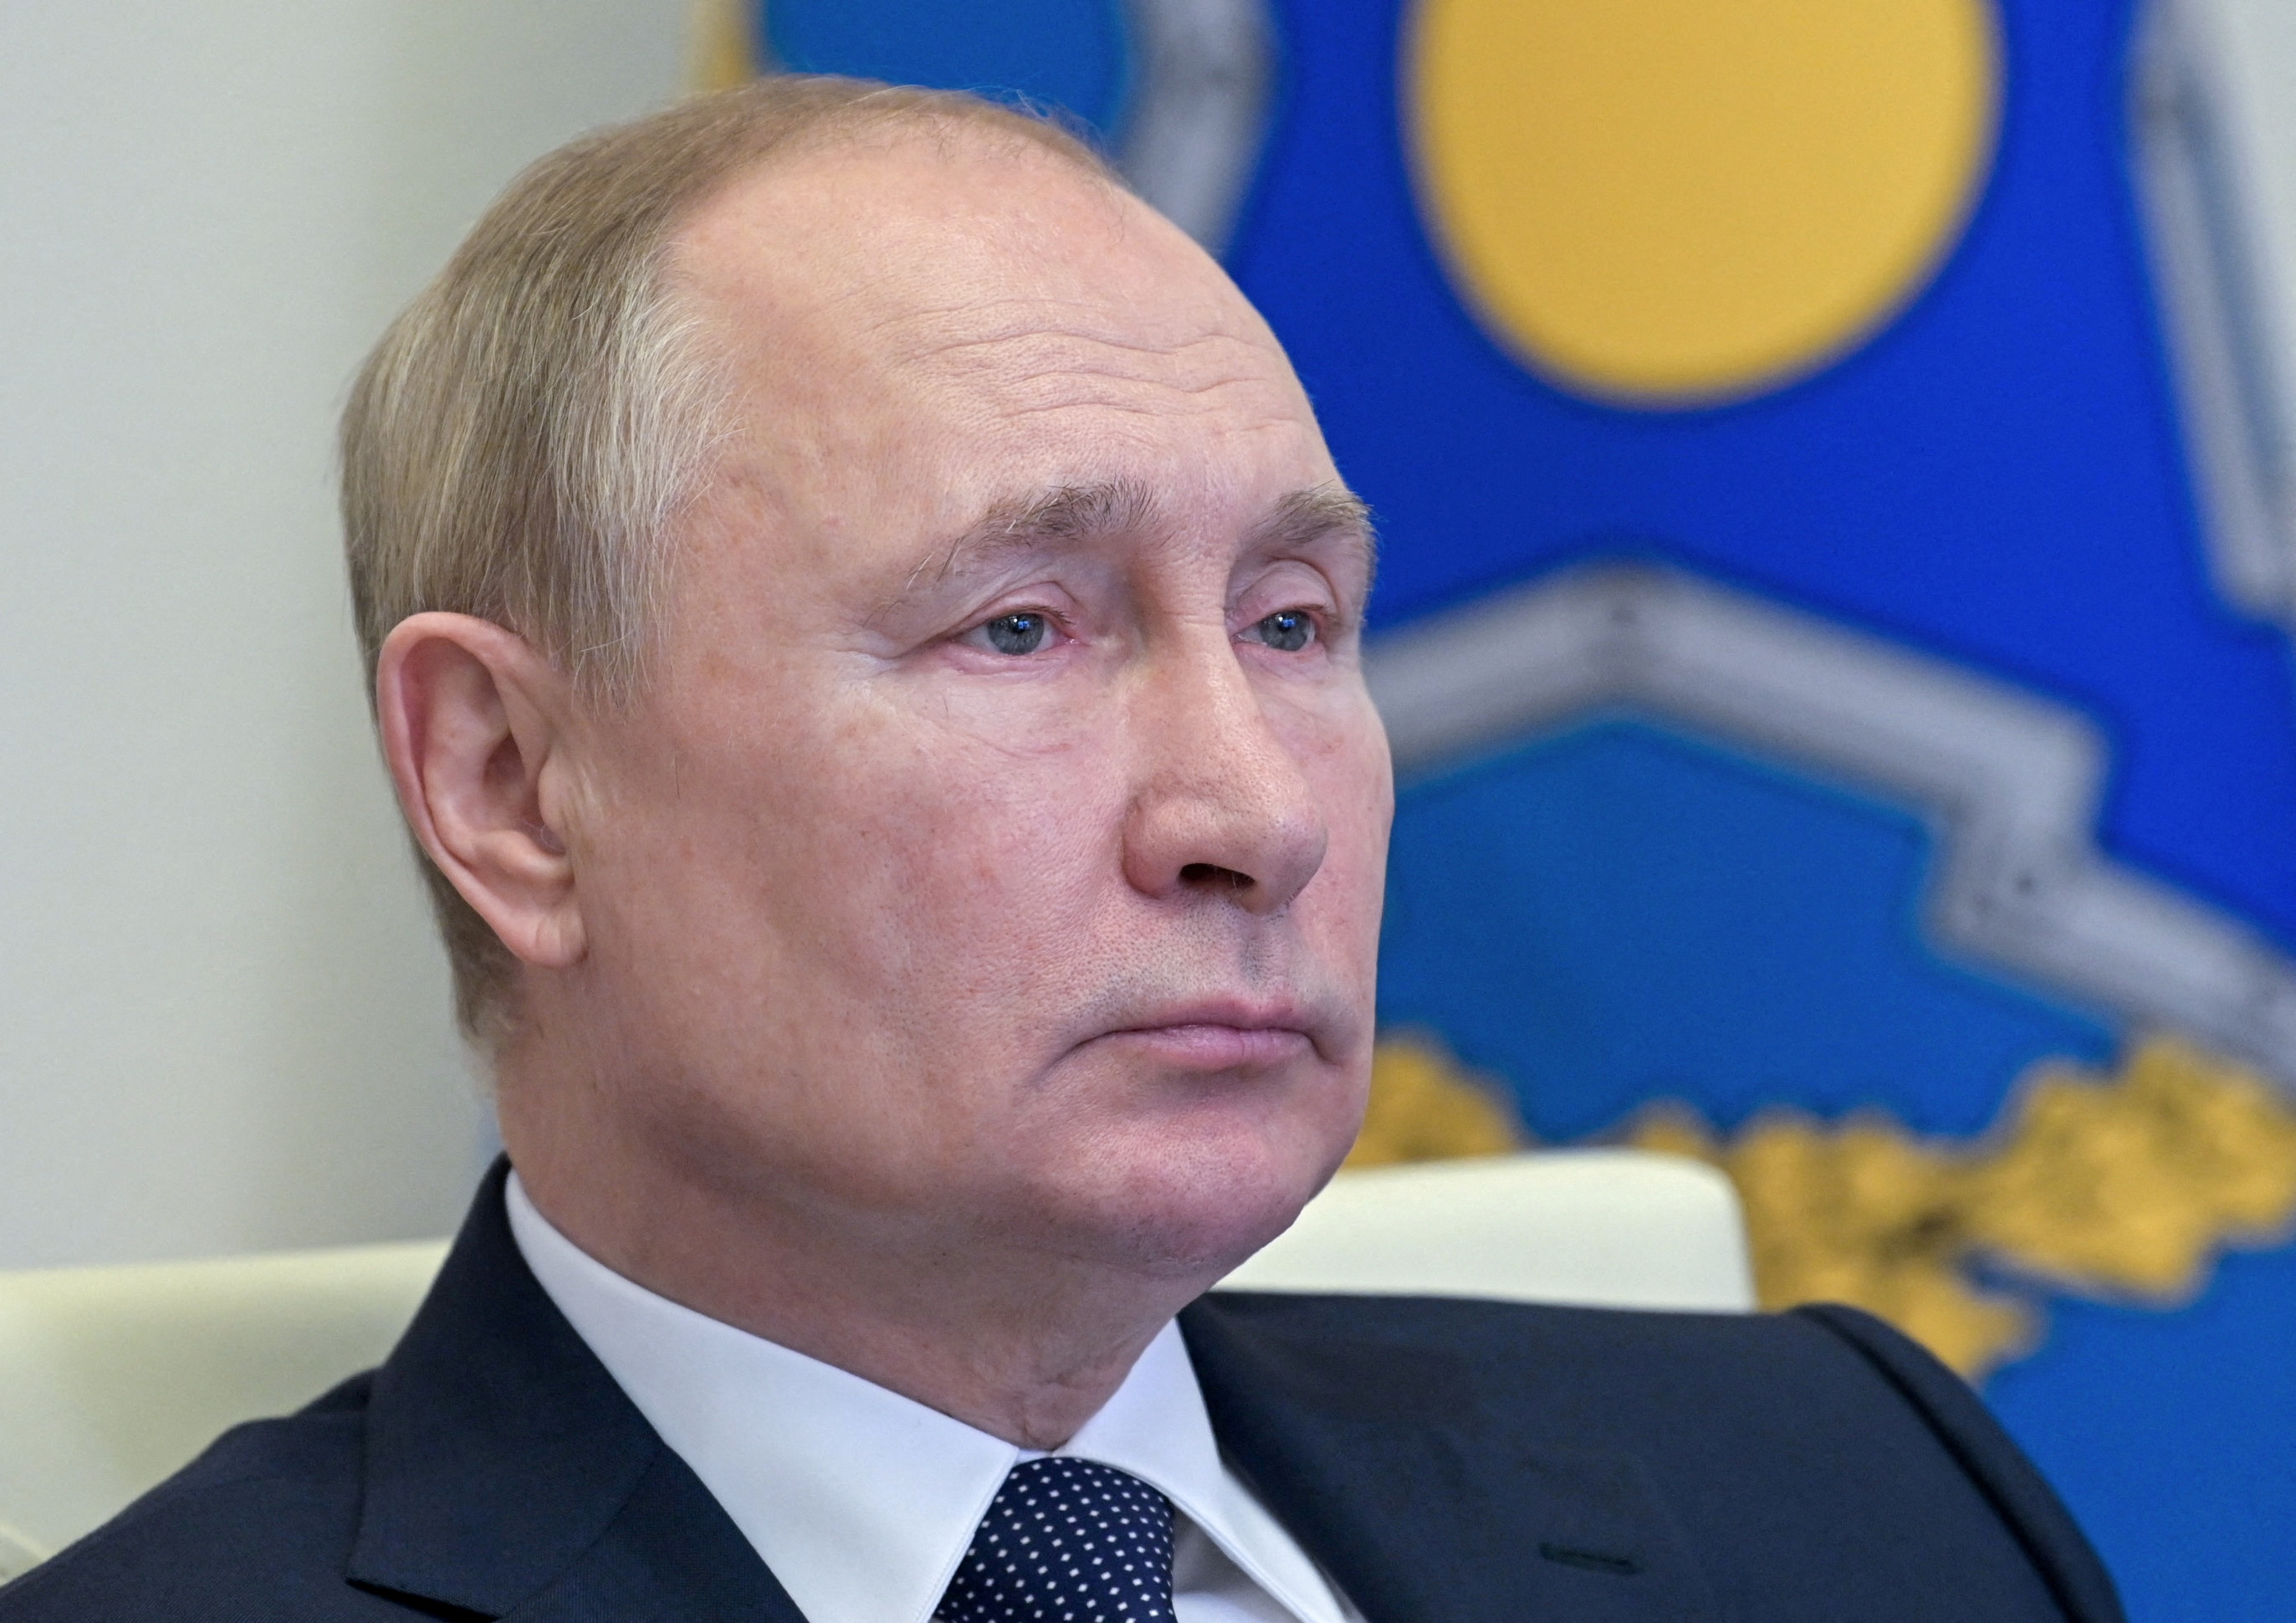 El presidente de Rusia, Vladimir Putin (Sputnik/Aleksey Nikolskyi/Kremlin via REUTERS)